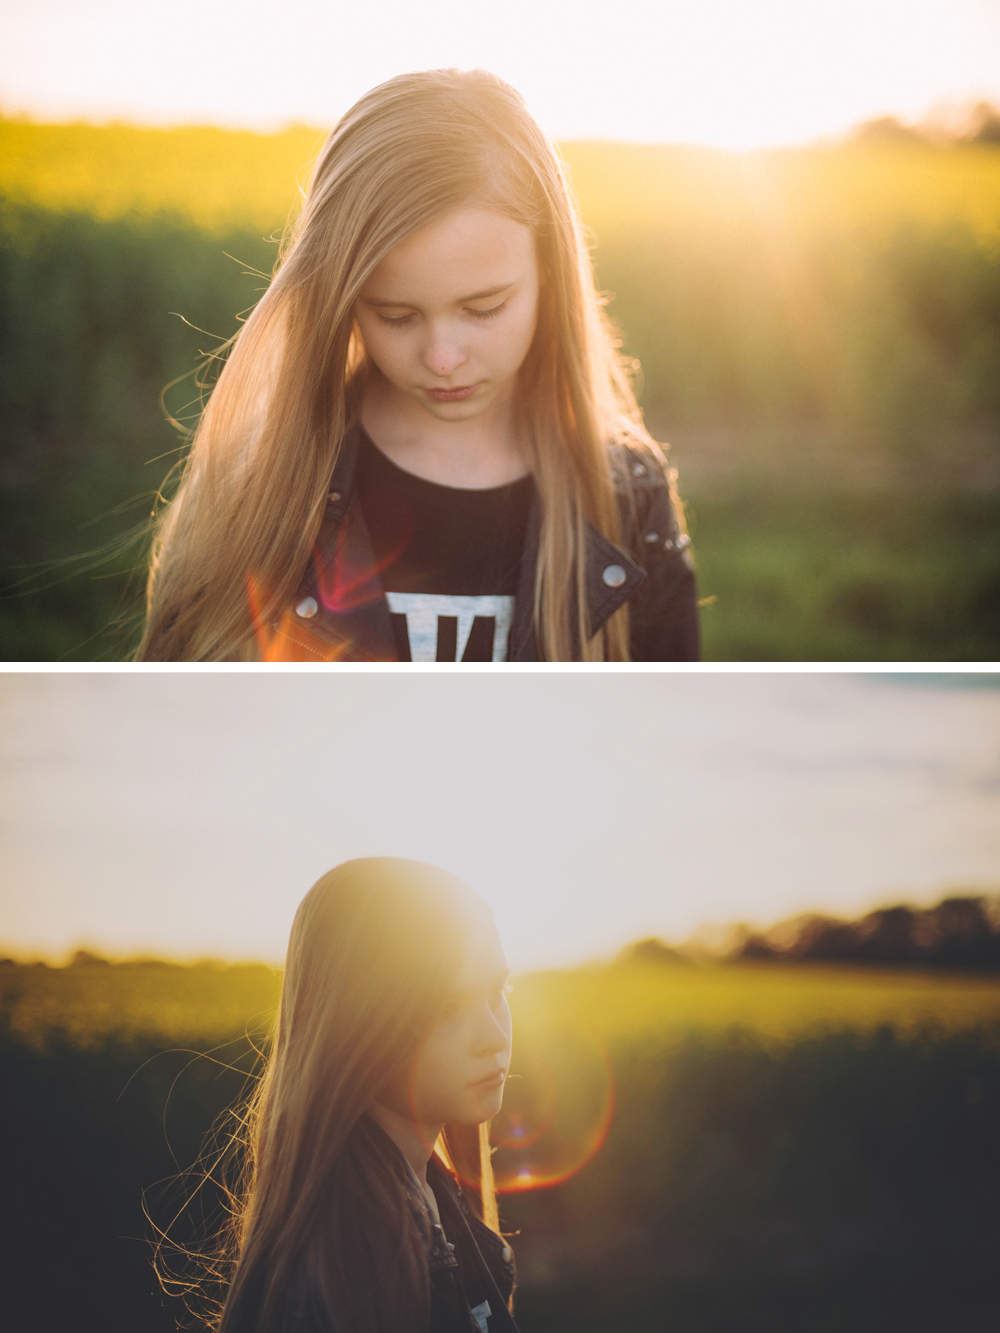  Three Flowers Photography Essex Wedding &amp; Lifestyle Photographer Kids Sunset Golden Hour shoot     